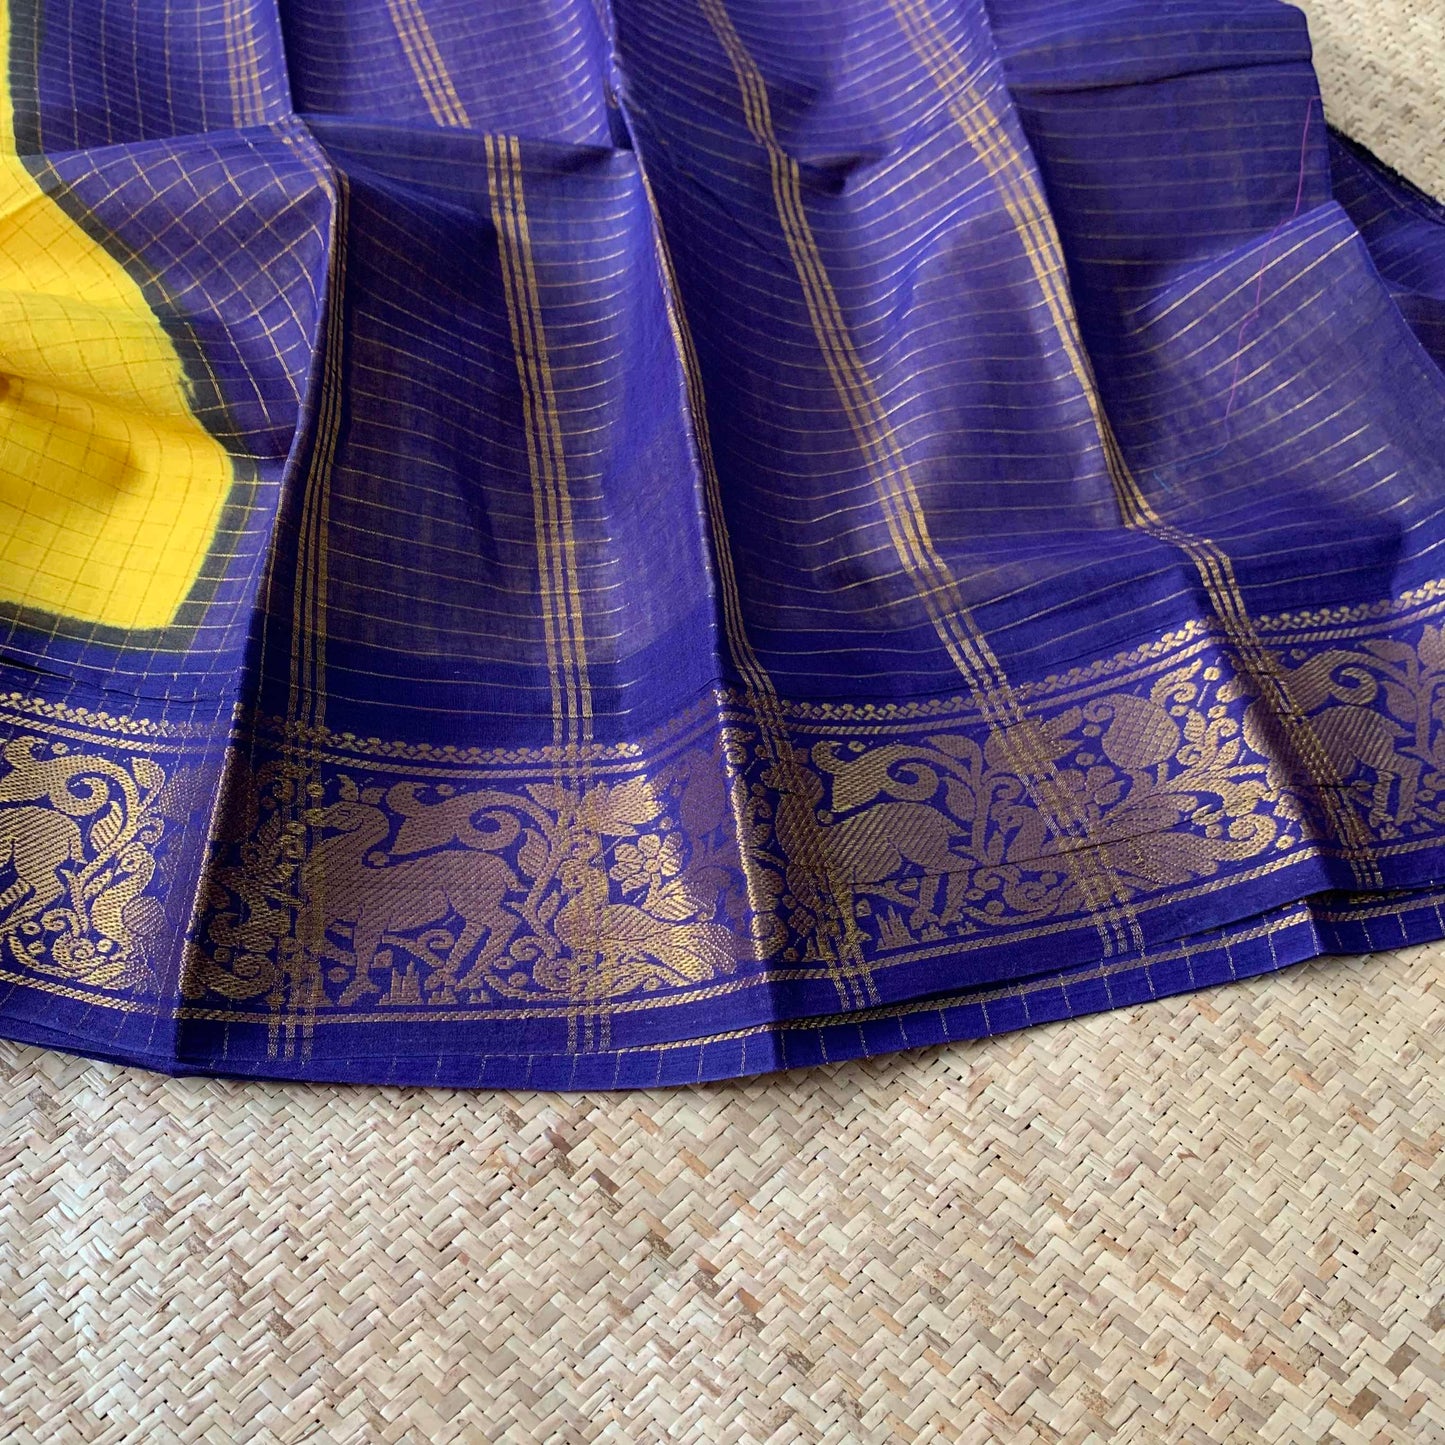 Yellow Saree With Blue Border, Madurai Kattam, Sungudi Cotton Saree